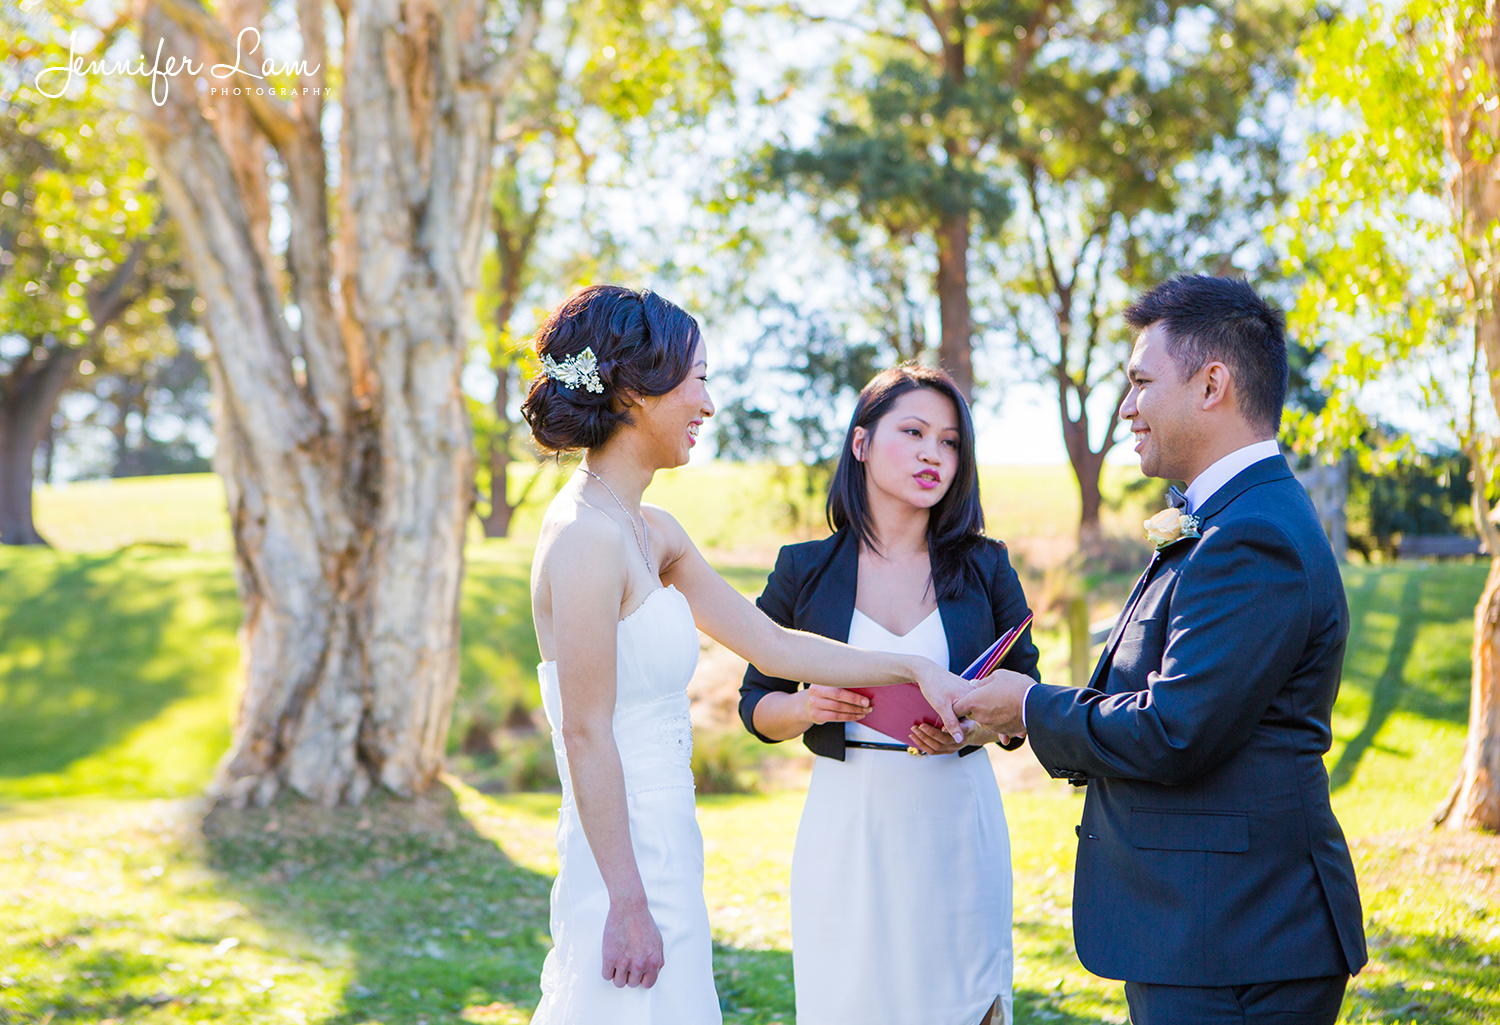 Sydney Wedding Photographer - Jennifer Lam Photography (56).jpg